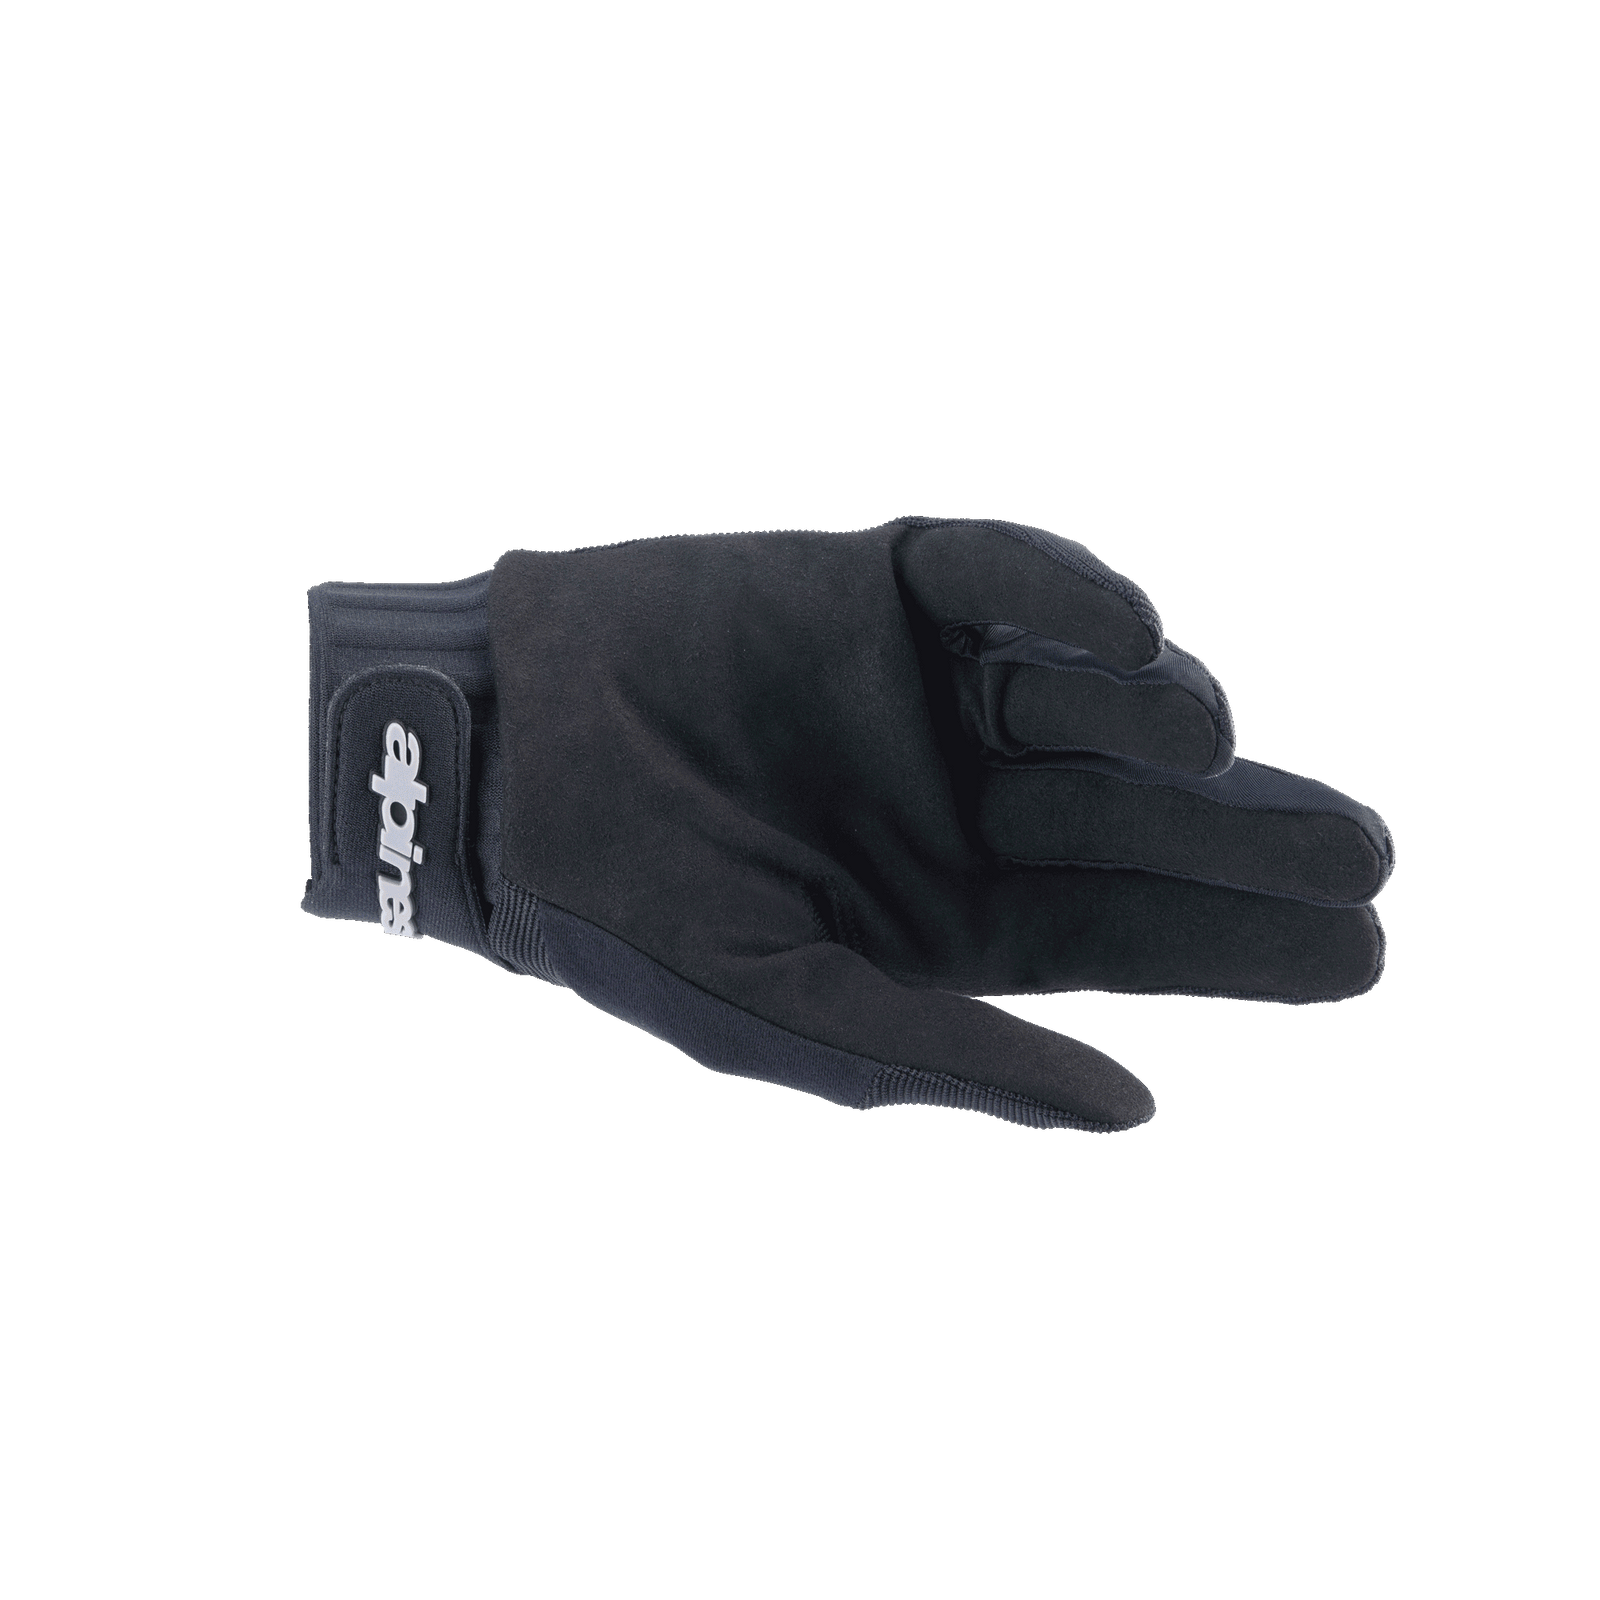 Jugendliche A-Dura Handschuhe